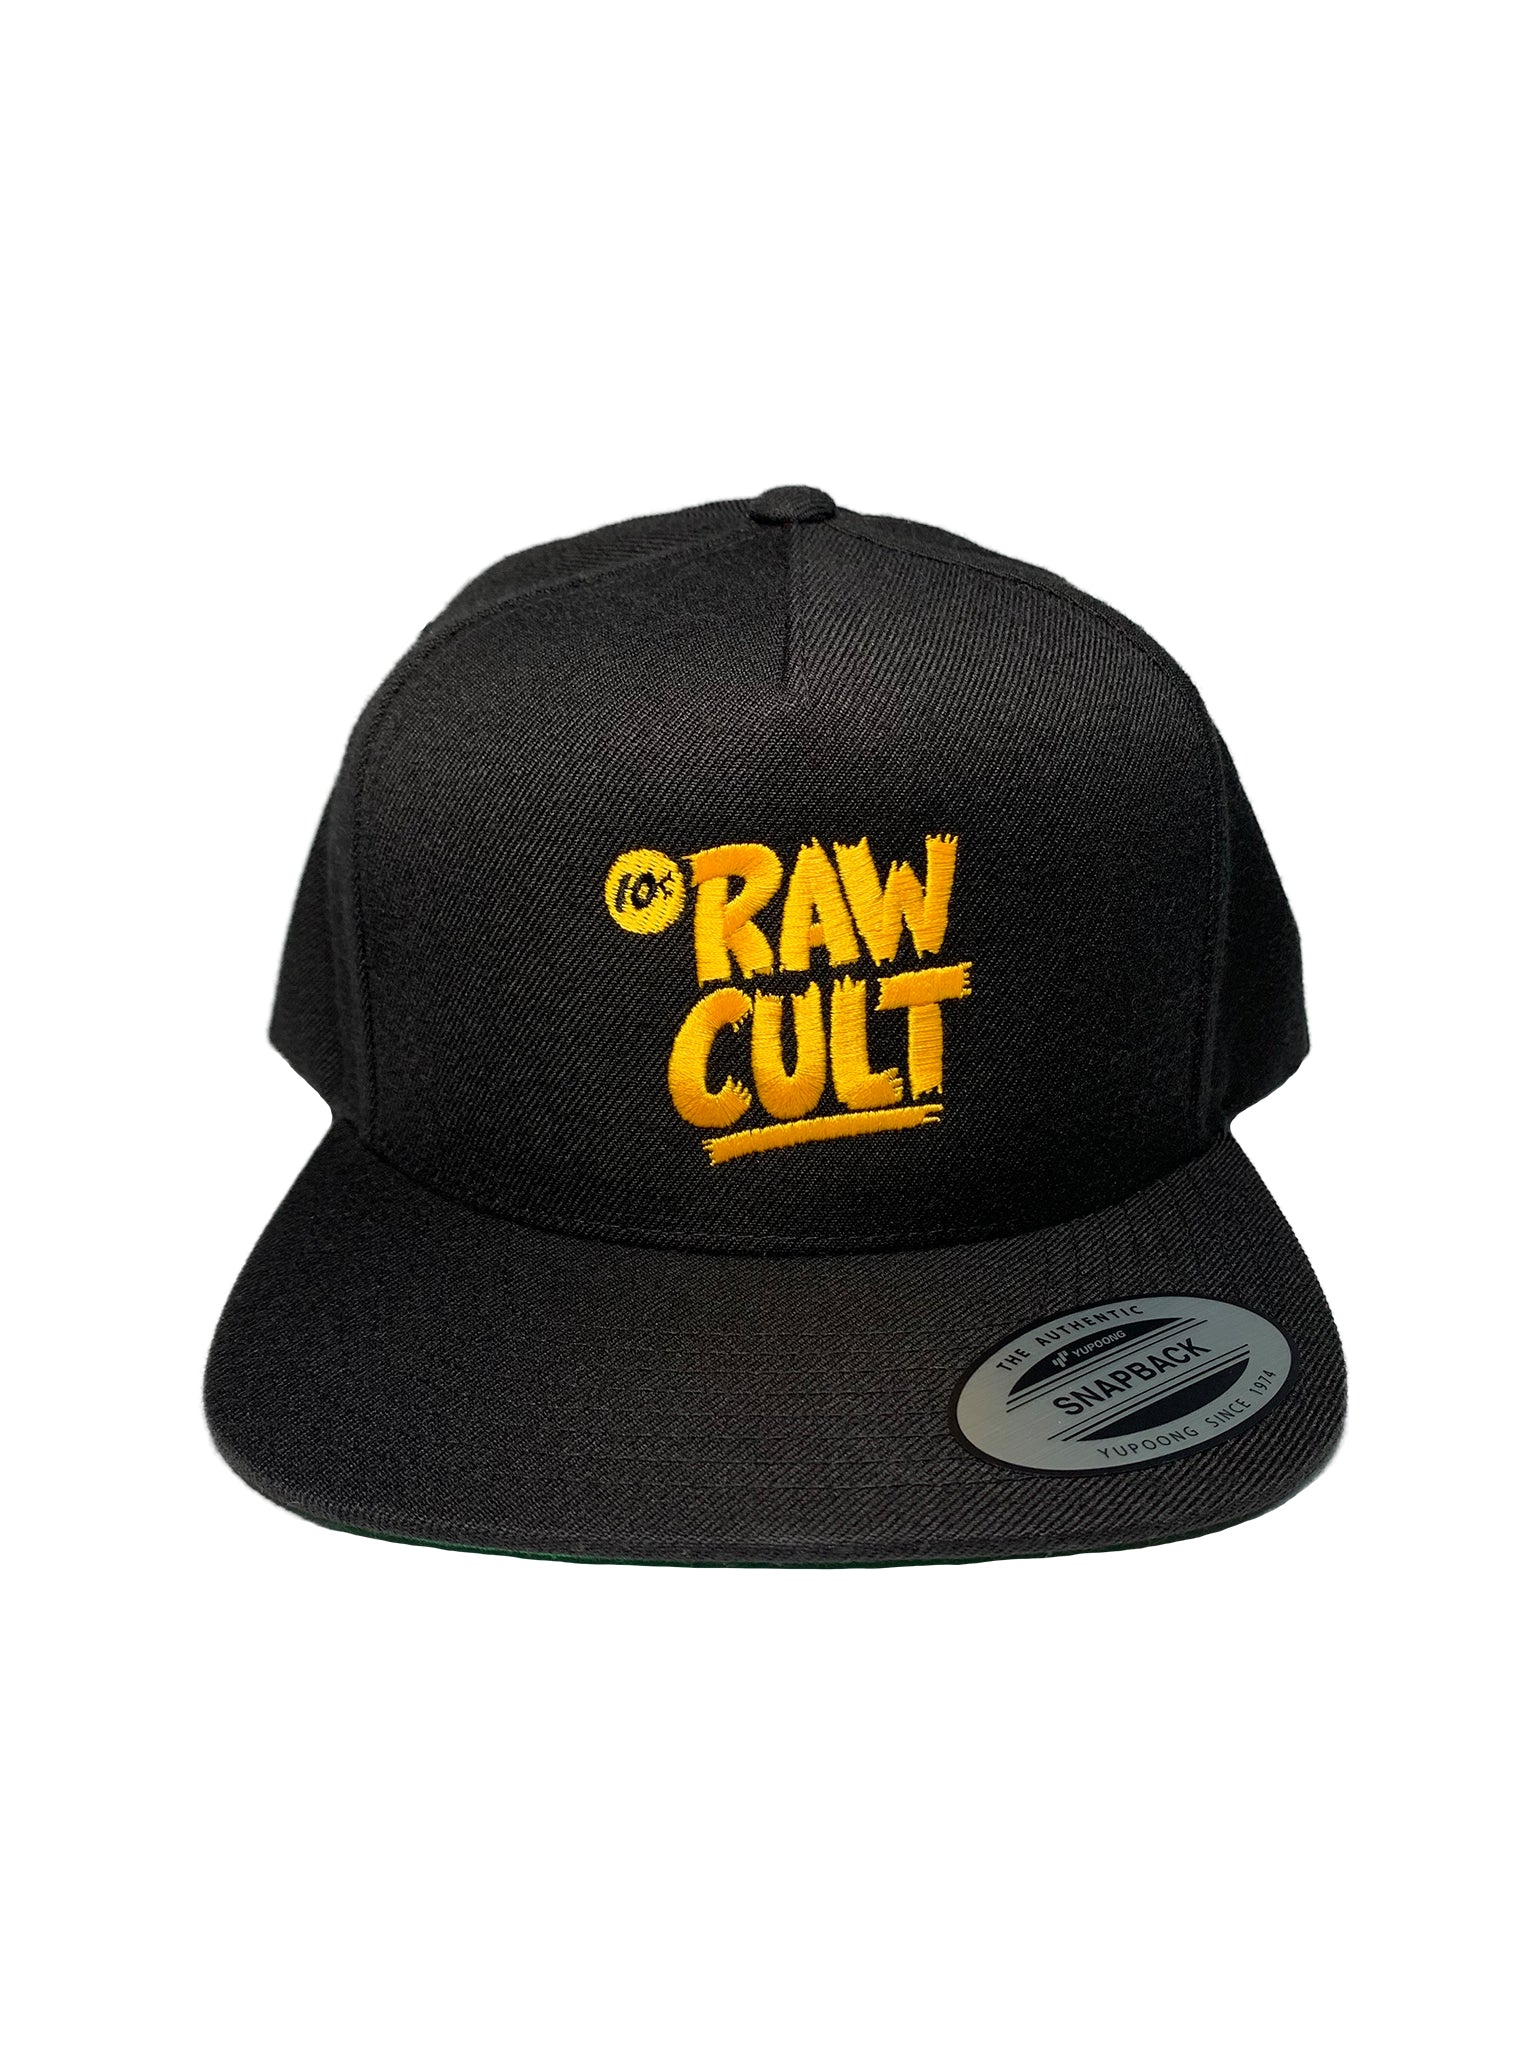 RAW CULT | Logo Snapback Cap - Yellow on Black